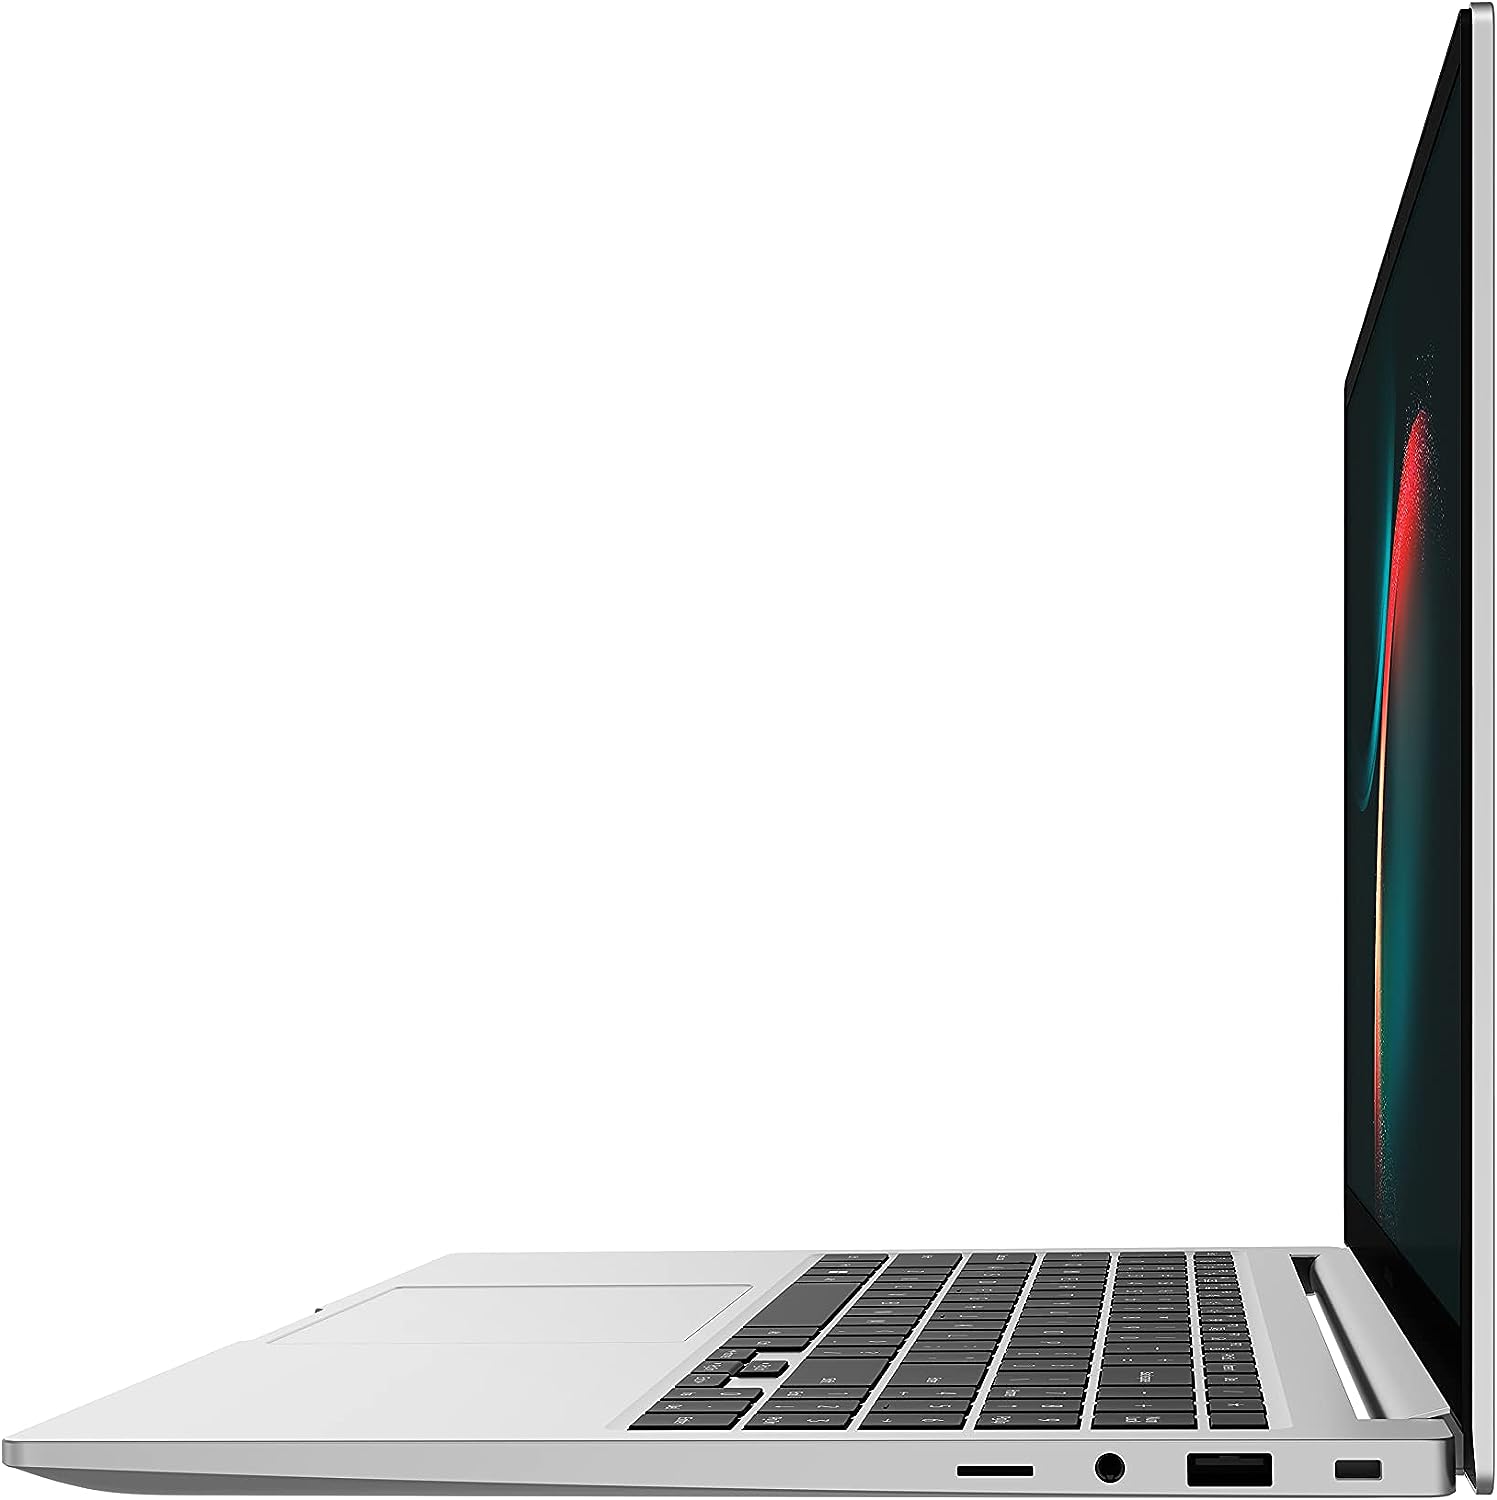 SAMSUNG Galaxy Book3 Business Laptop Computer Review